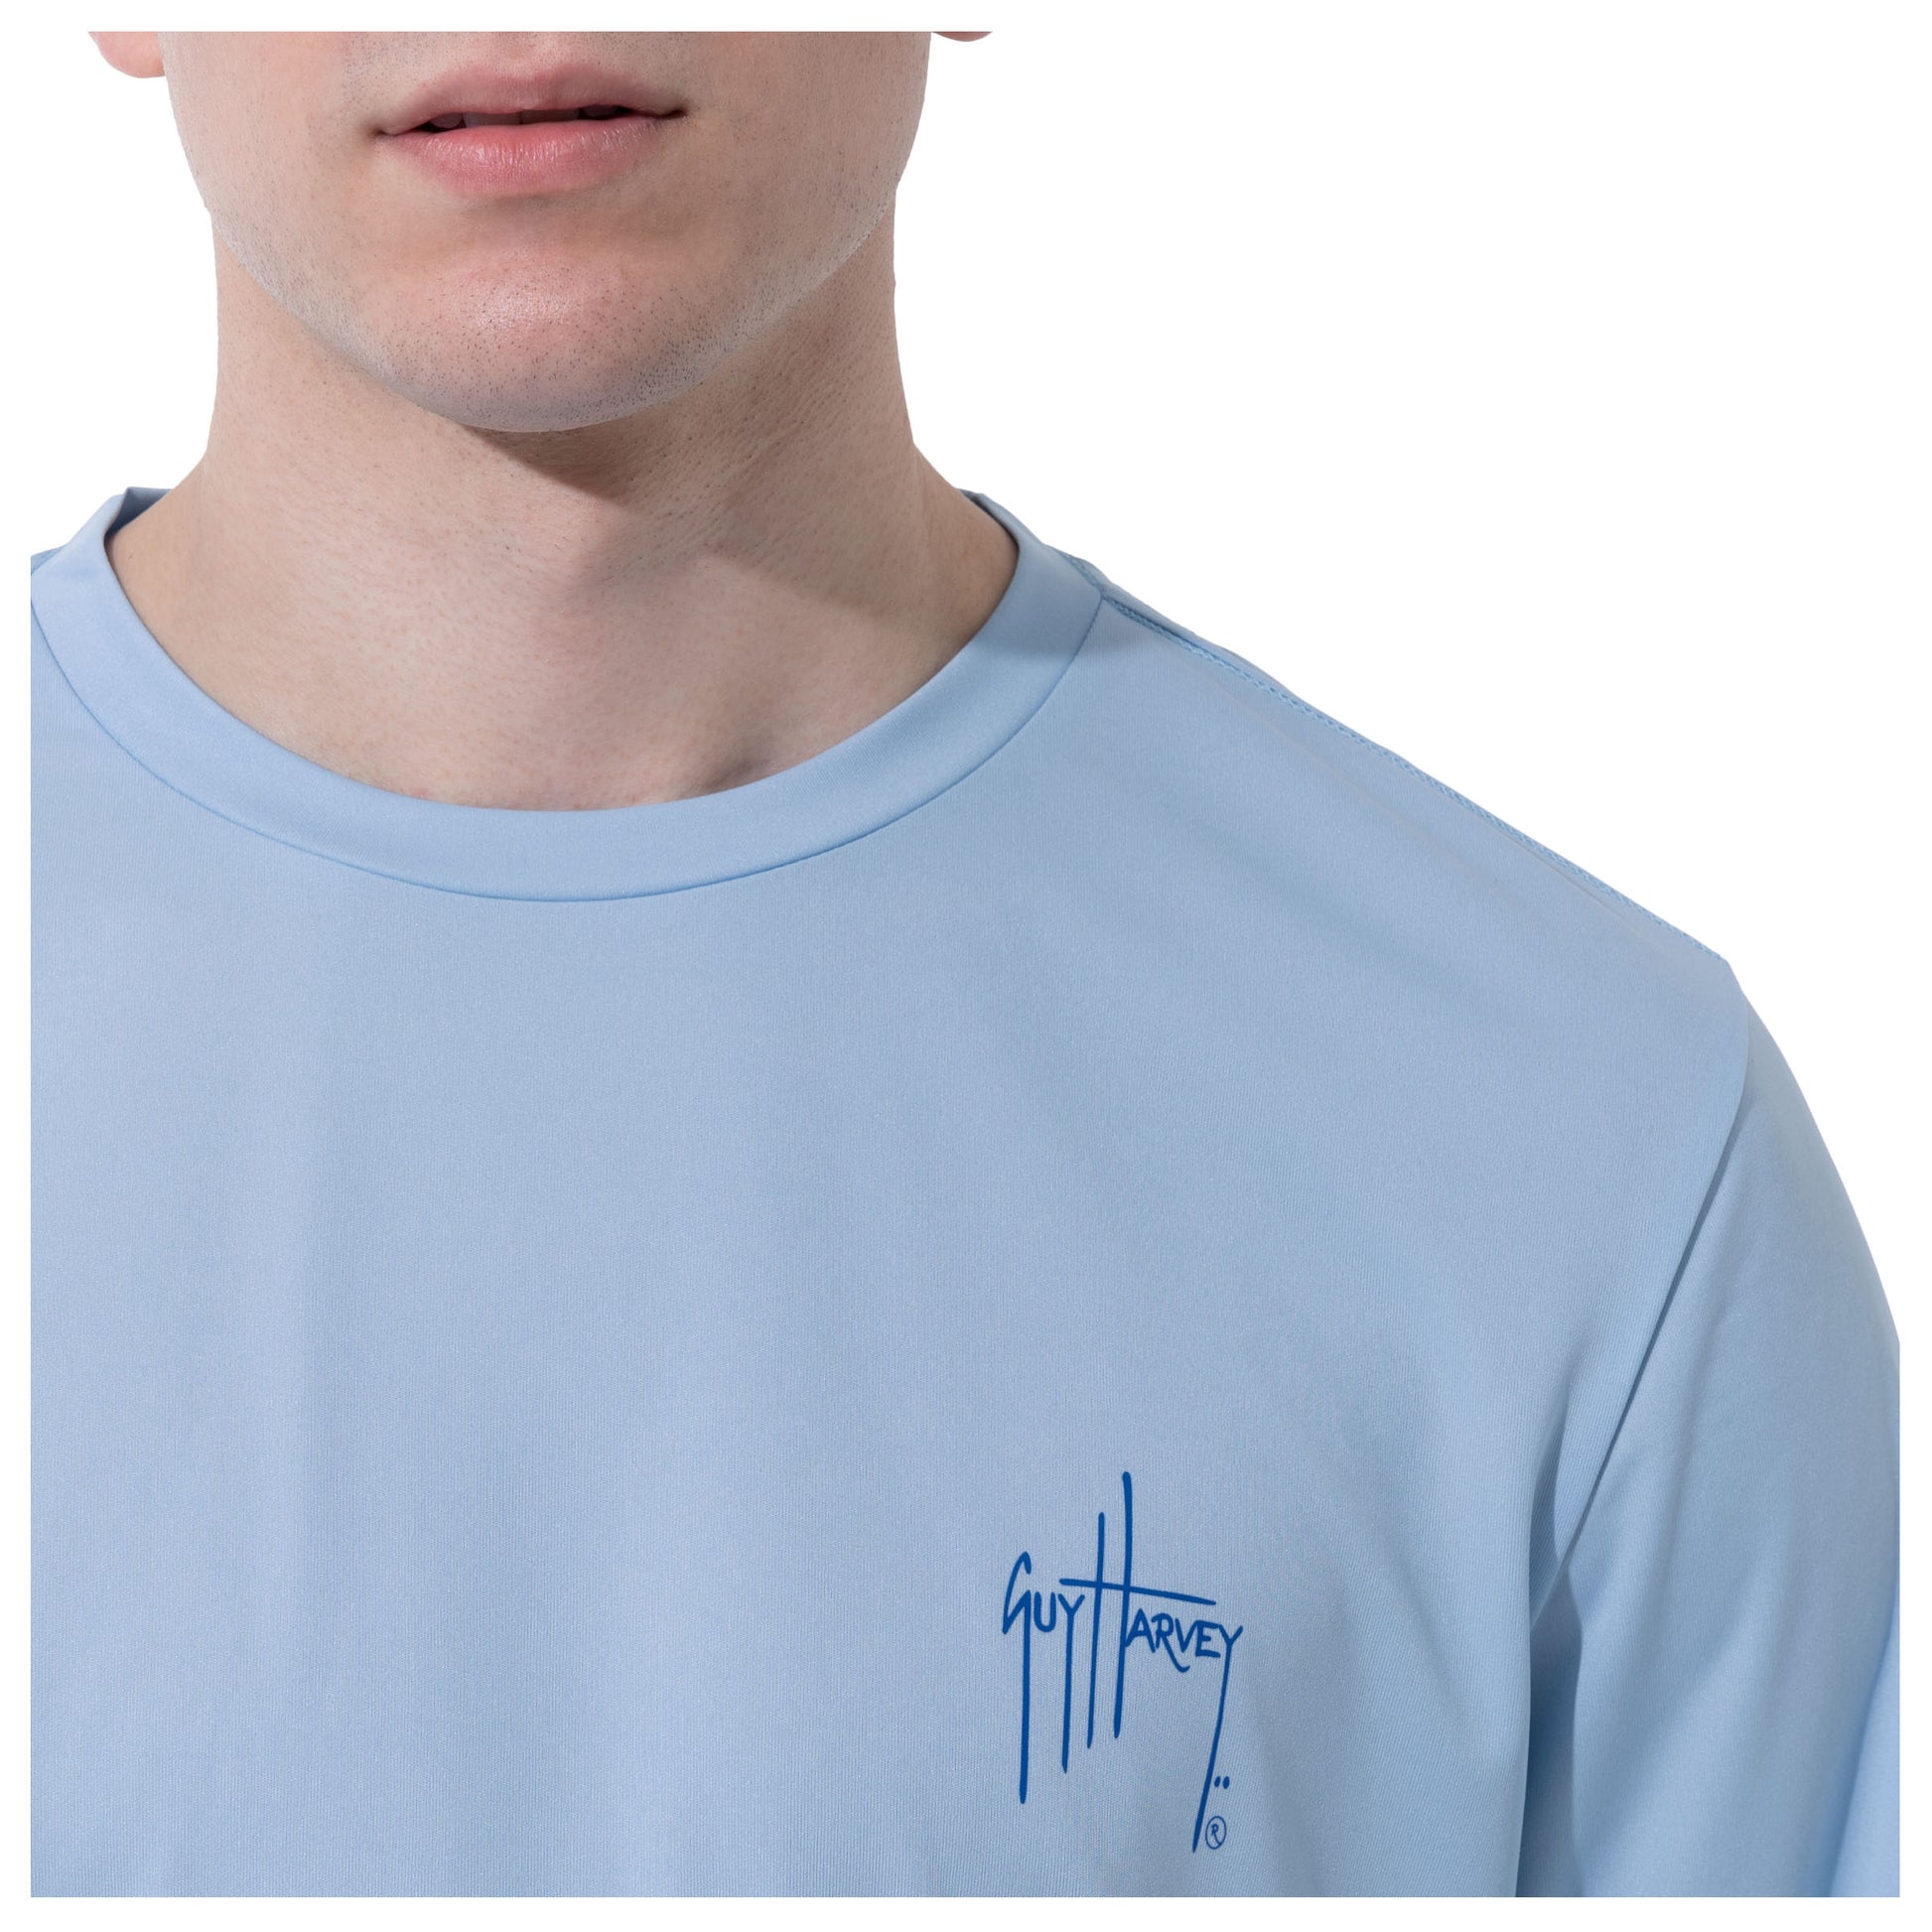 inhzoy Men's Quick-Dry UPF 50+ UV Sun Protection Long Sleeve Rash Guard  Compression Shirts Top Type A L 